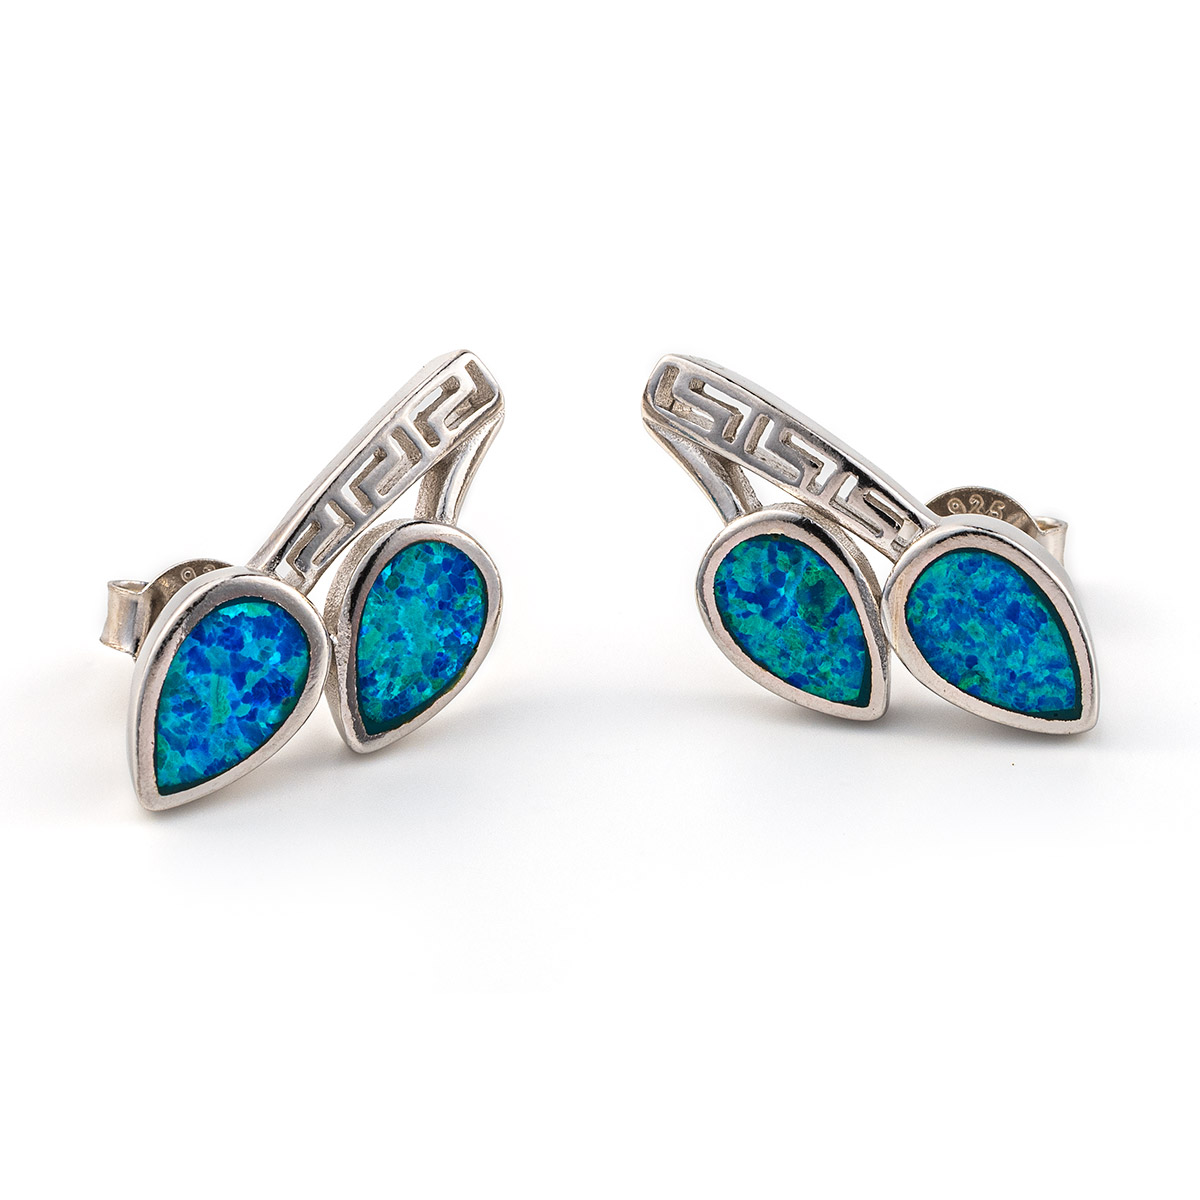 Leaf Stud Earrings – 925 Sterling Silver with Opal